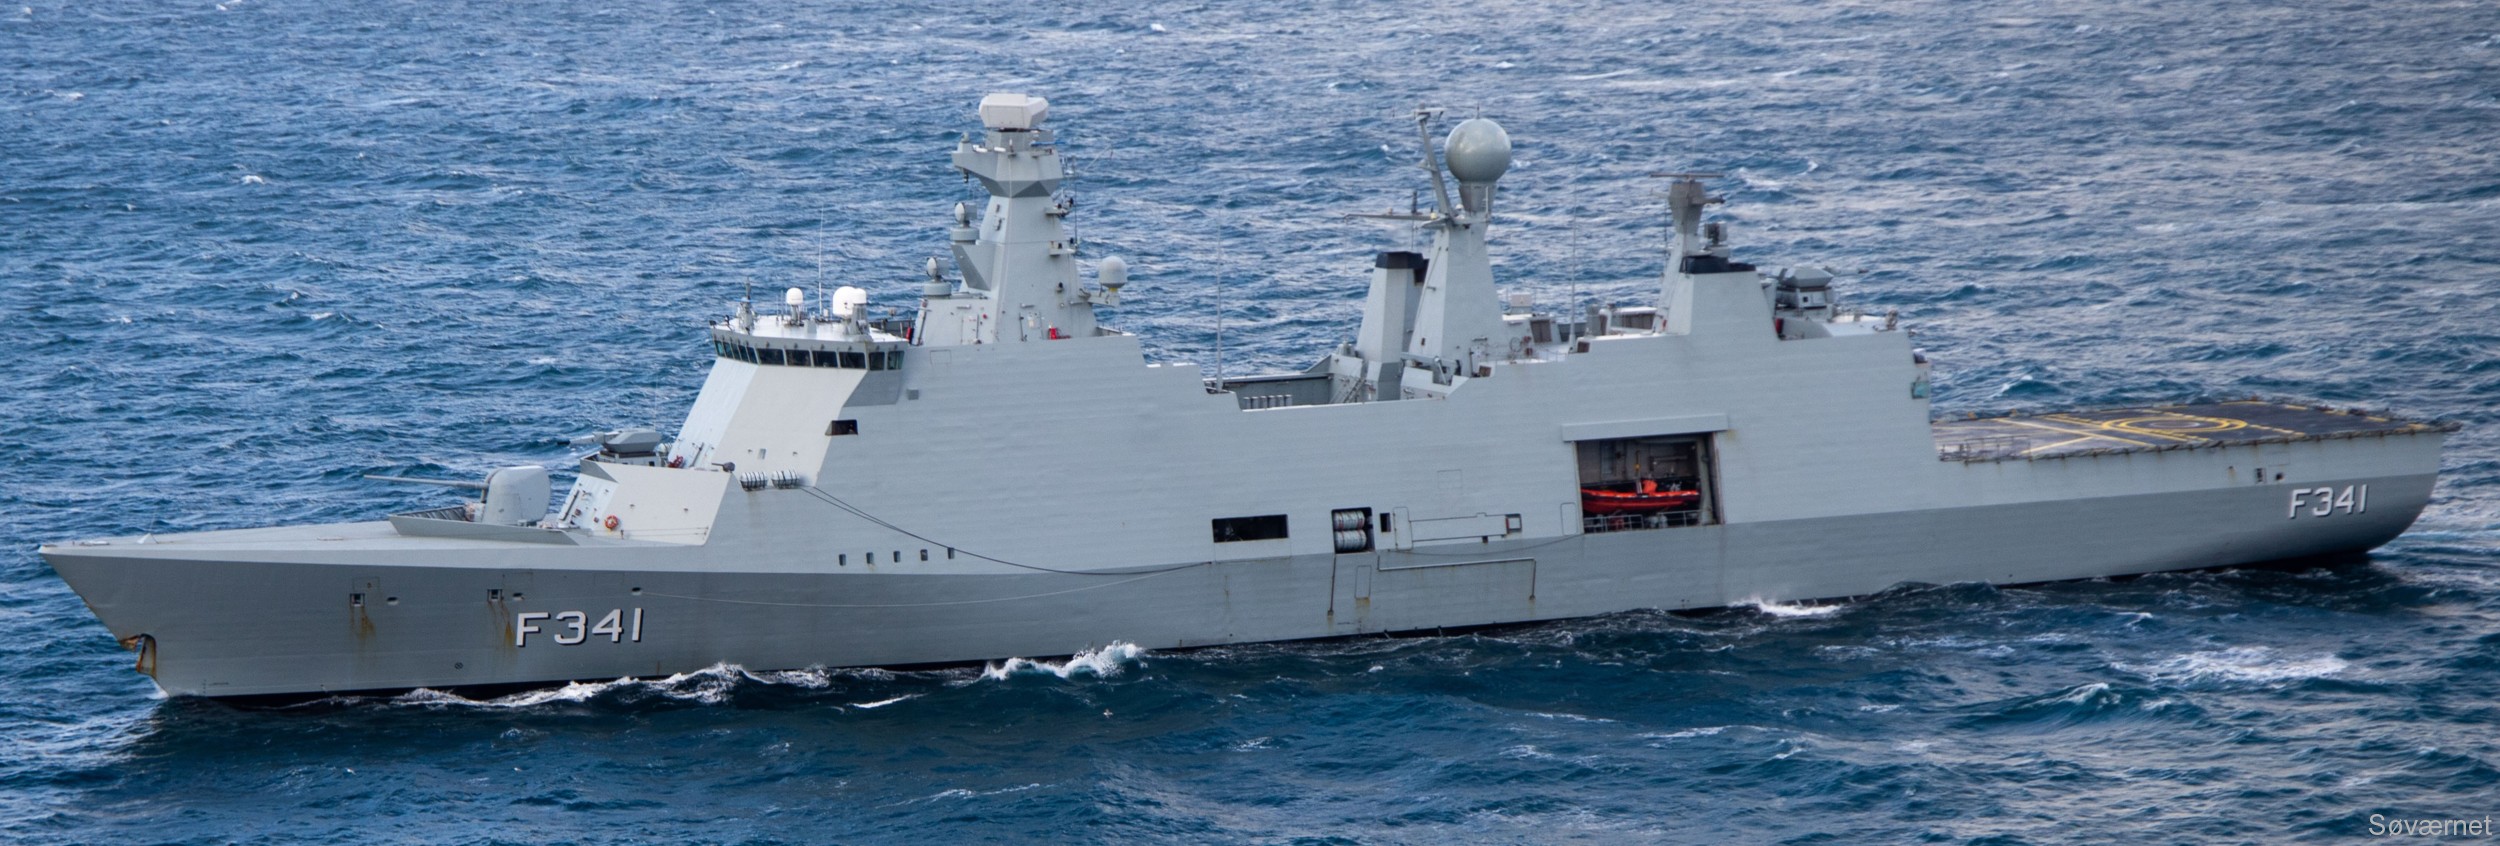 f-341 hdms absalon class frigate command support ship l-16 royal danish navy kongelige danske marine stanflex 04x